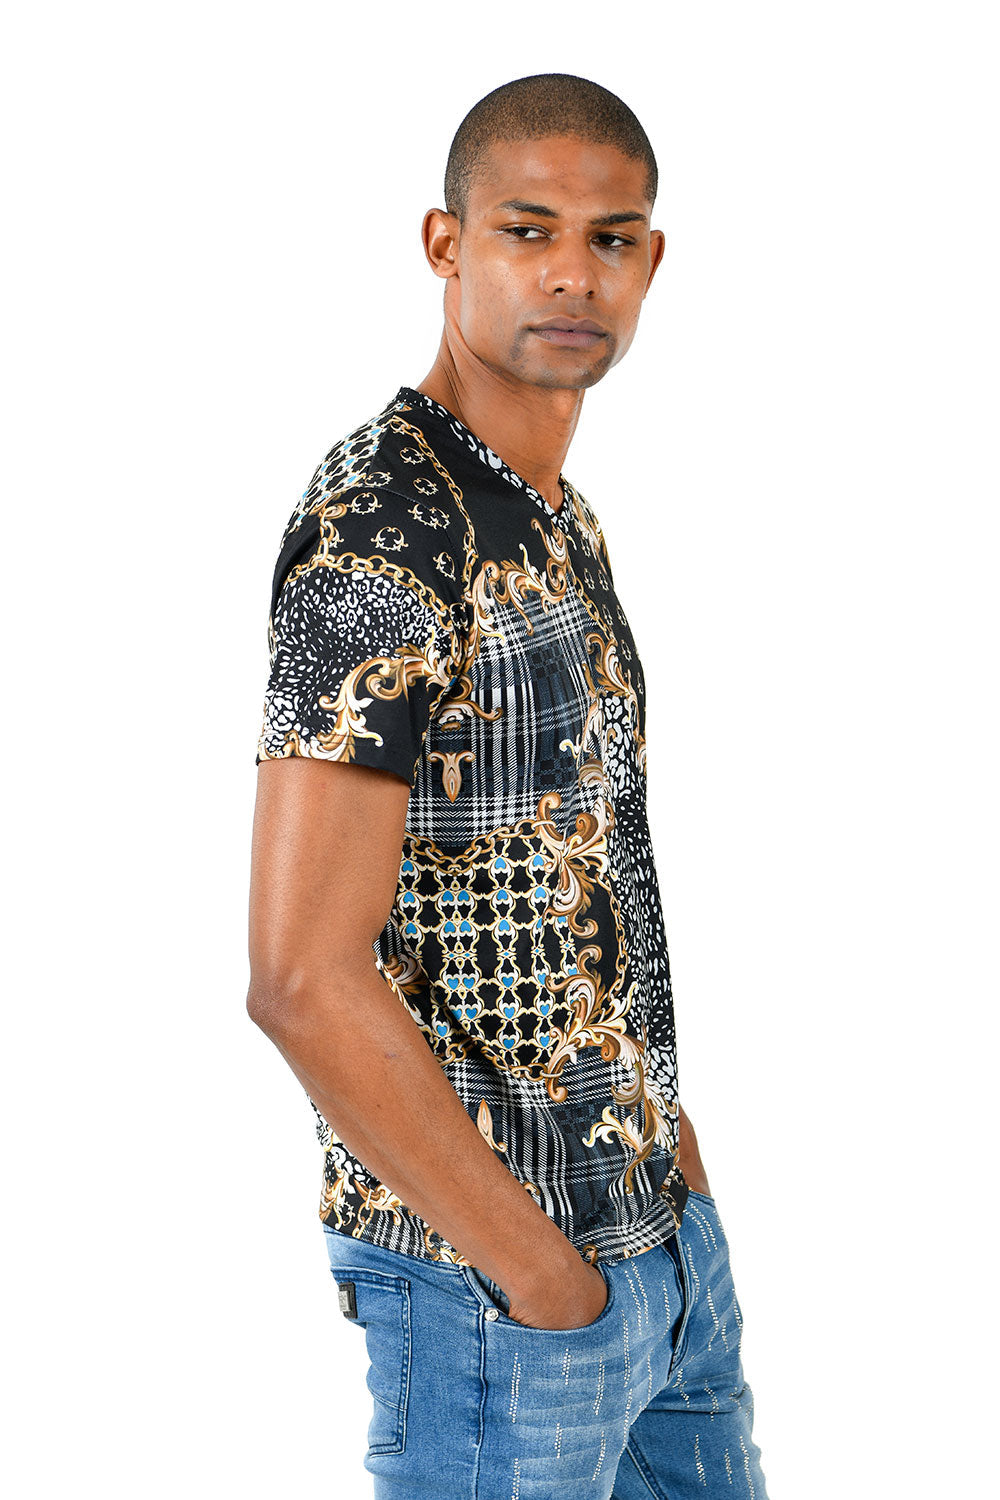 Barabas Men's Luxury Floral Checkered Printed V-Neck t-Shirts TV206 Gold